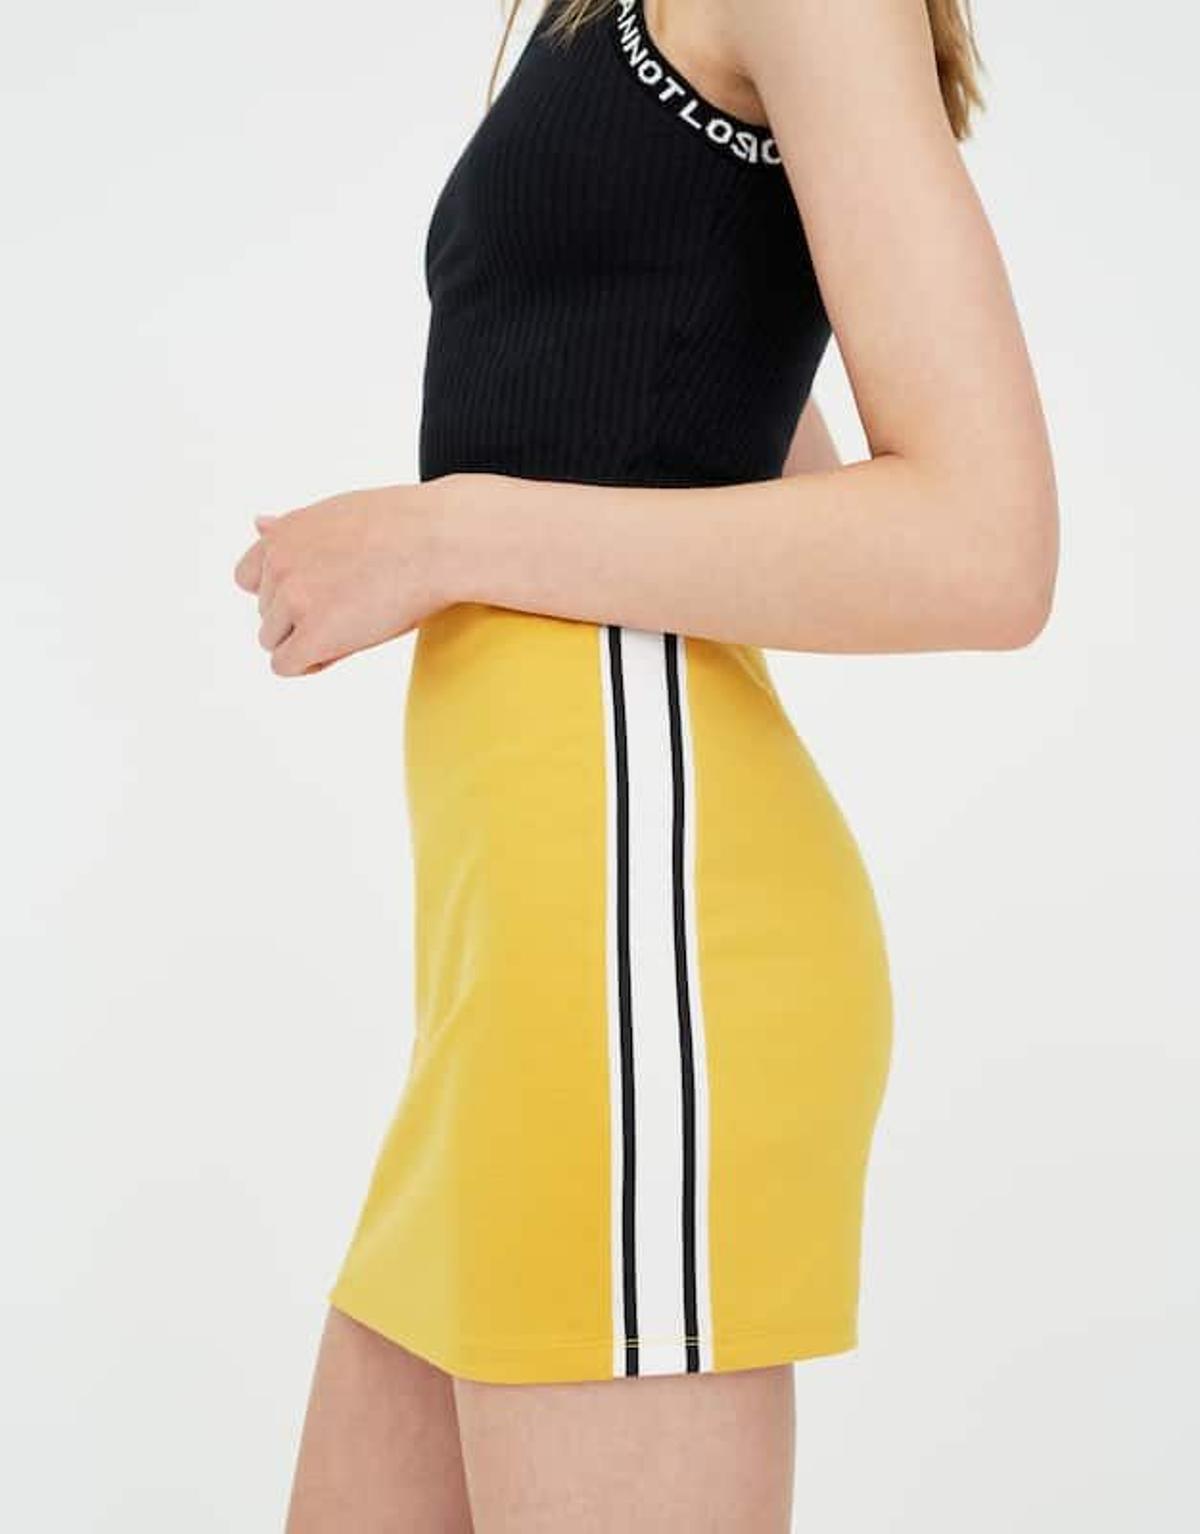 Minifalda con banda lateral de Pull and Bear (Precio: 3,99 euros)